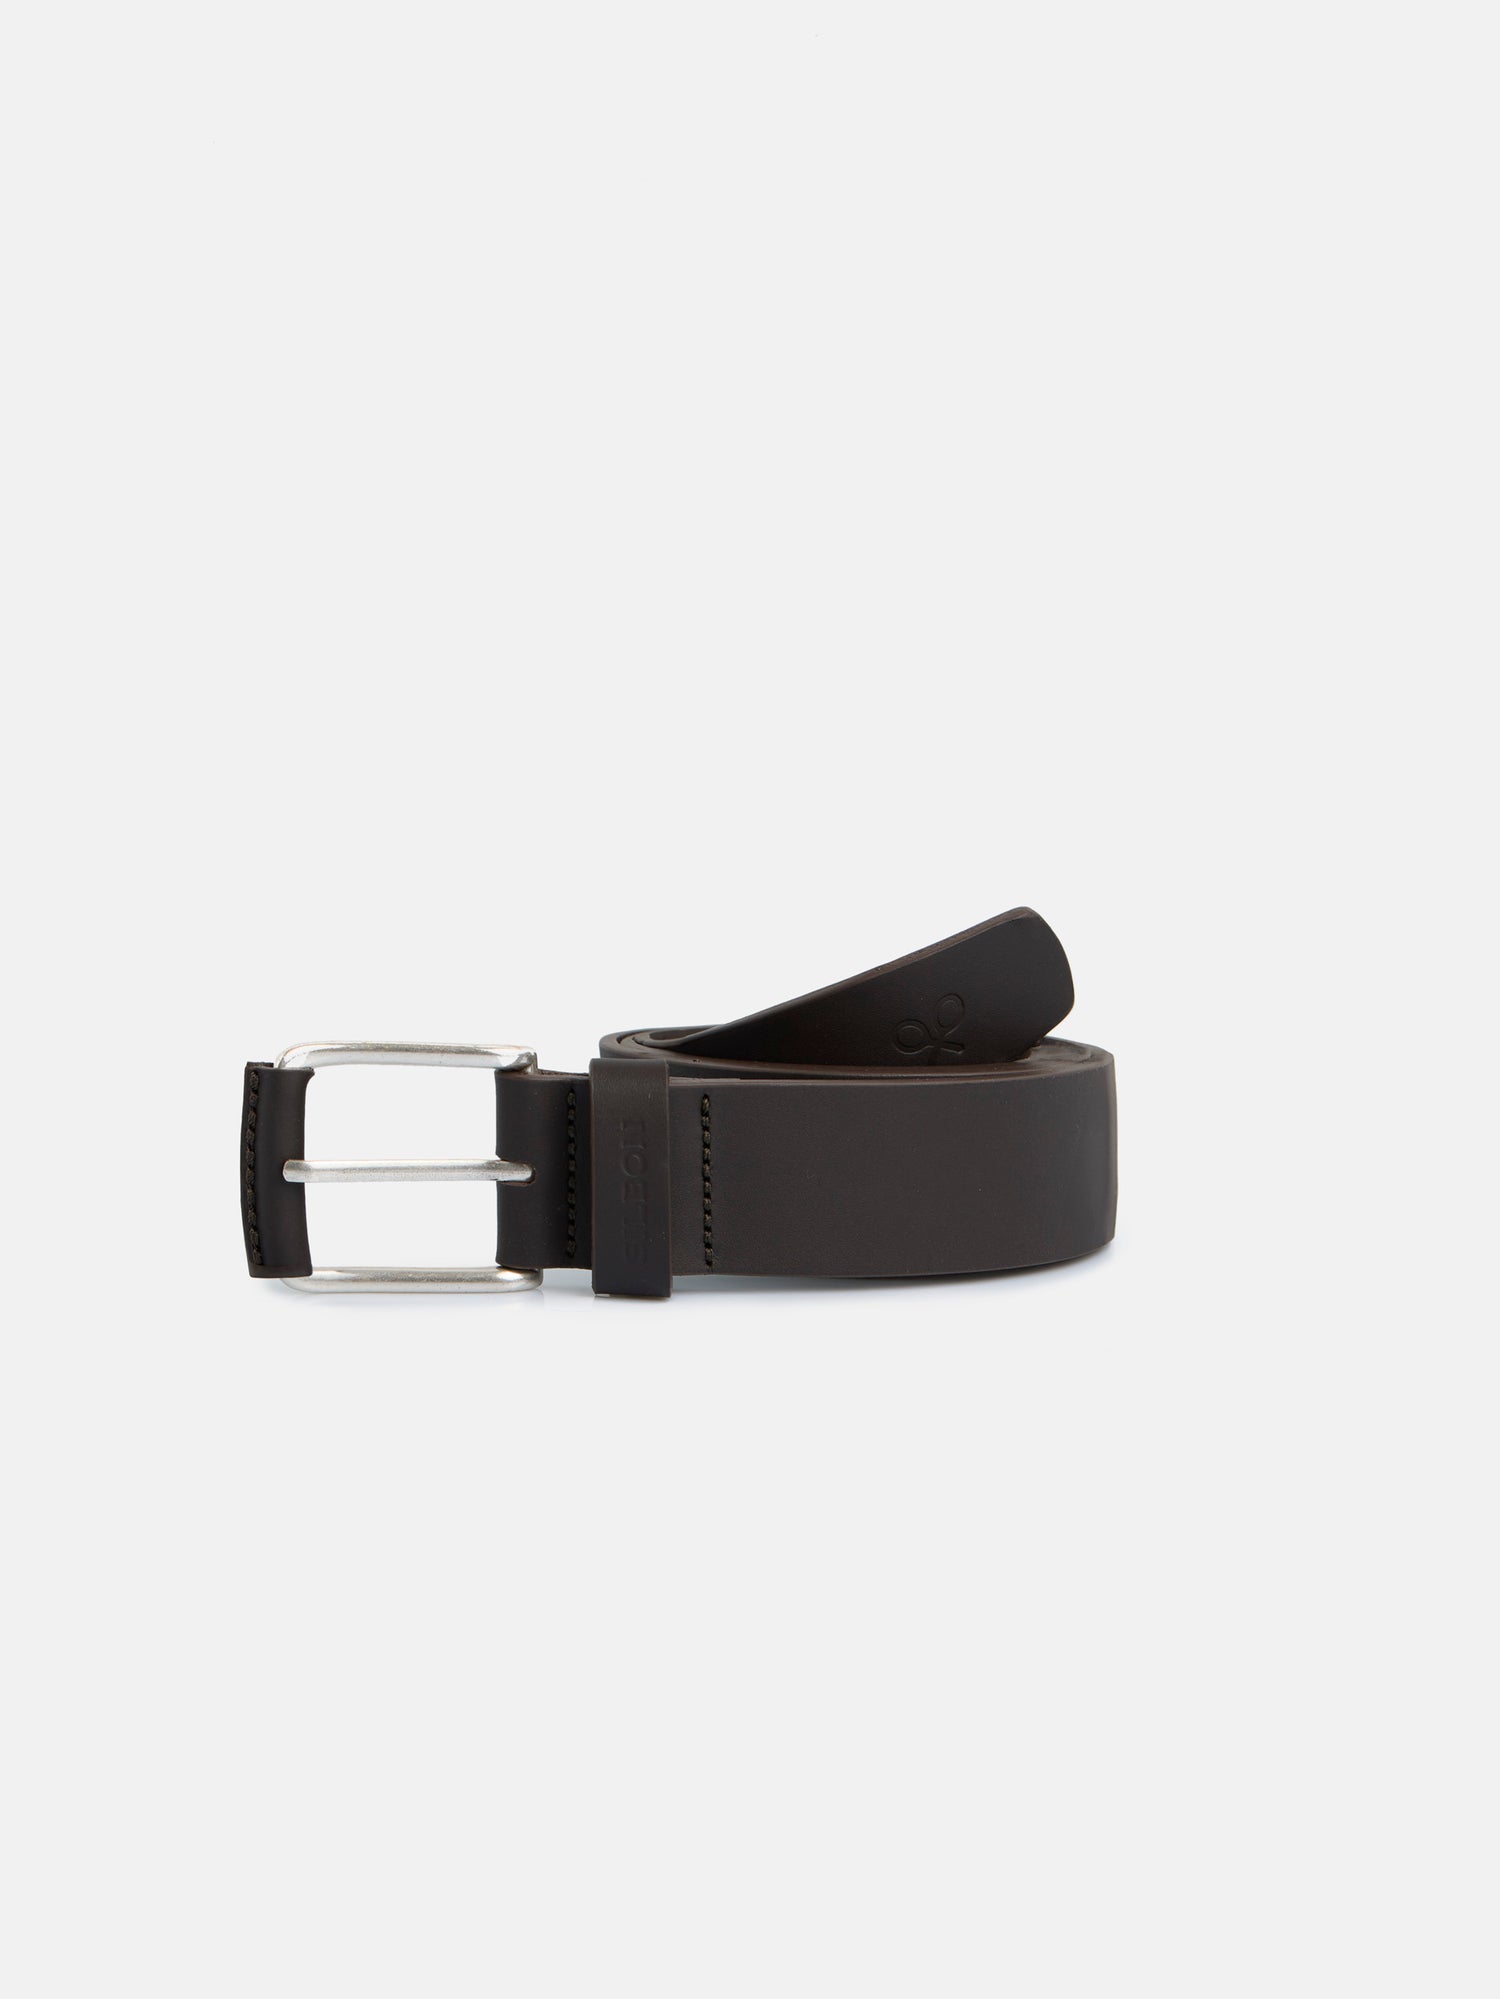 Colored SB leather belt